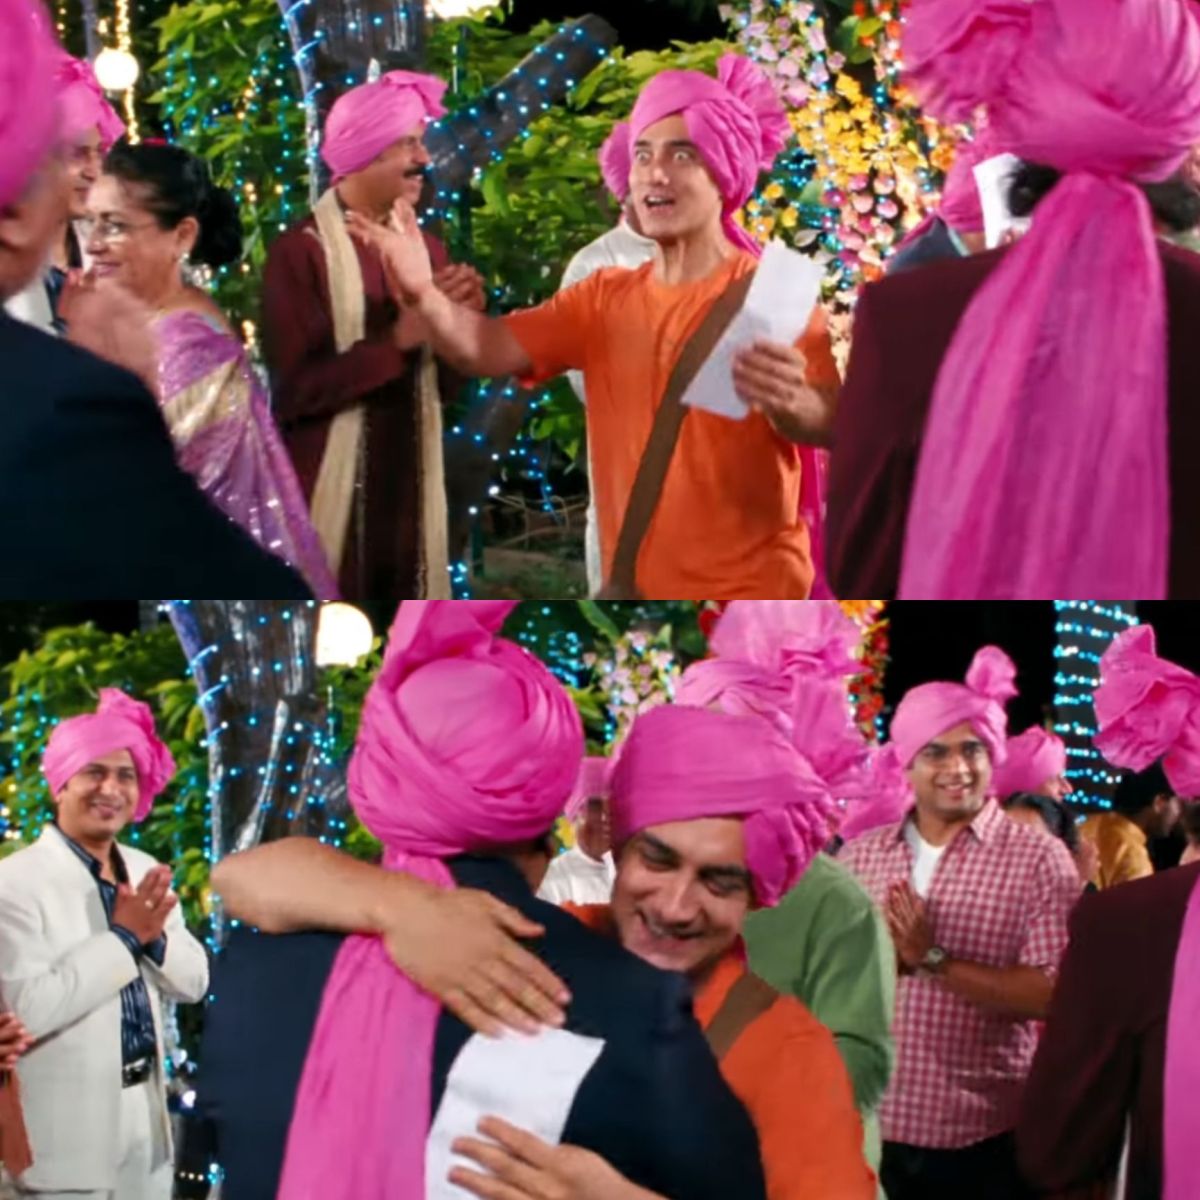 Aamir Khan Hugging A Stranger At A Wedding in 3idiots meme template